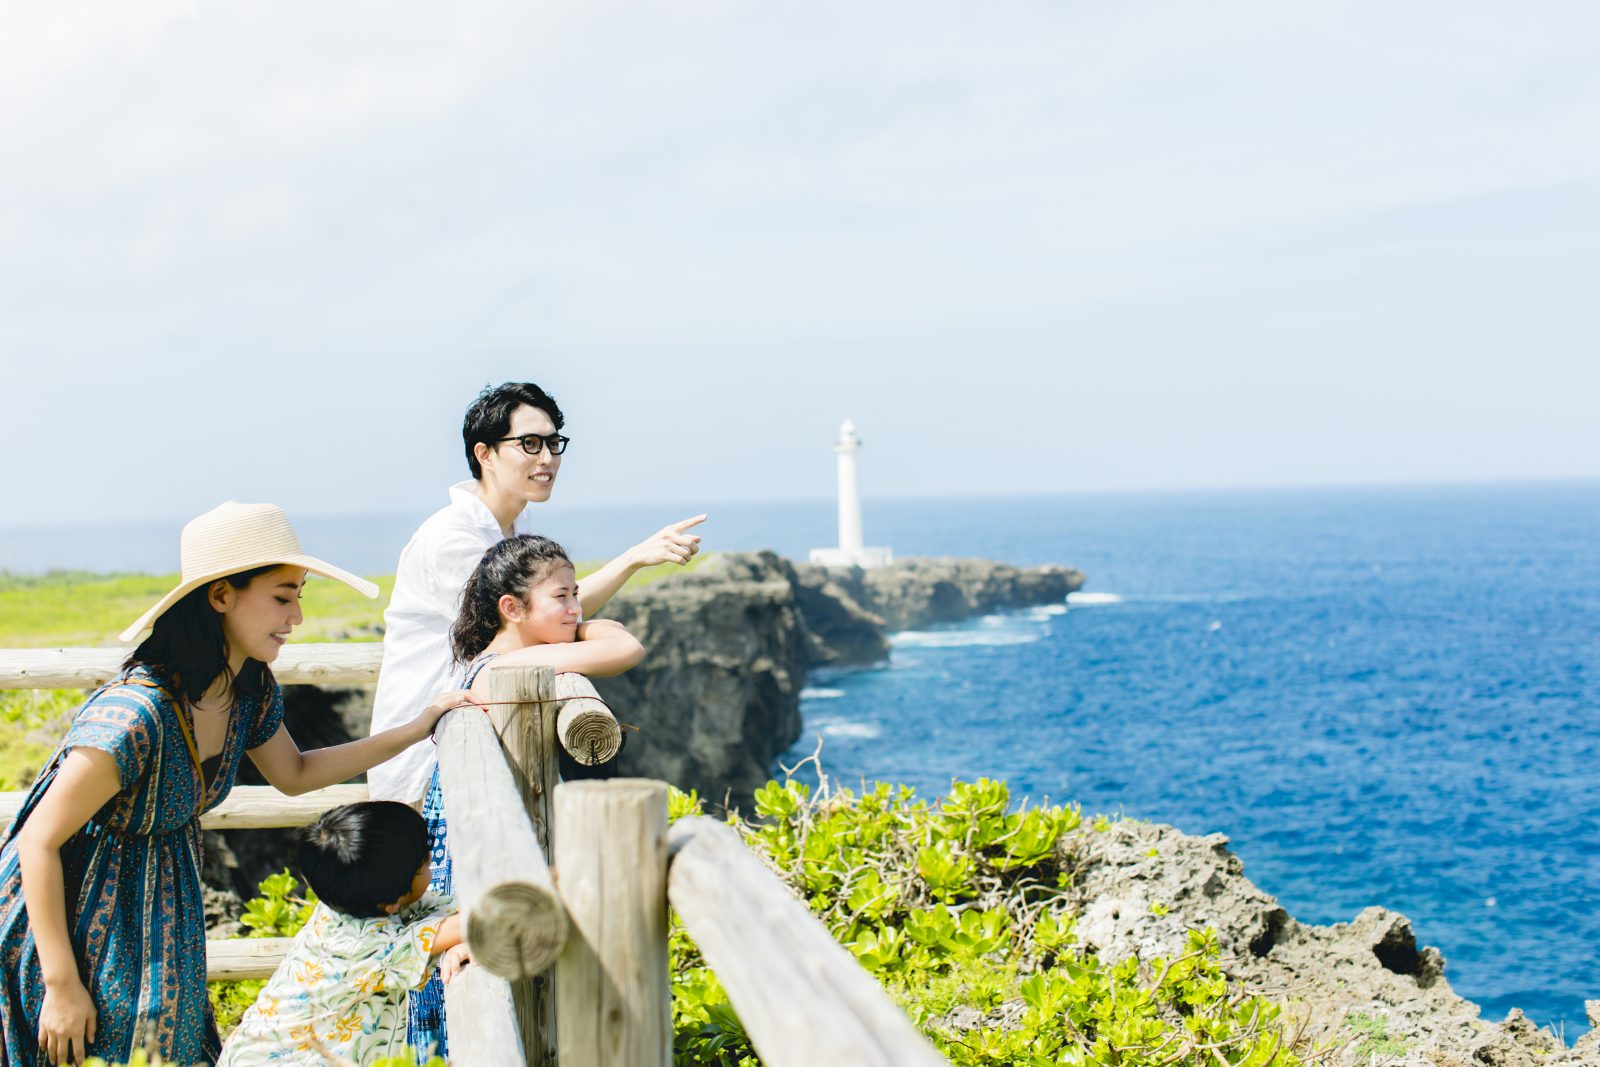 殘波岬公園|Grand Mercure Okinawa Cape Zanpa Resort【官方】